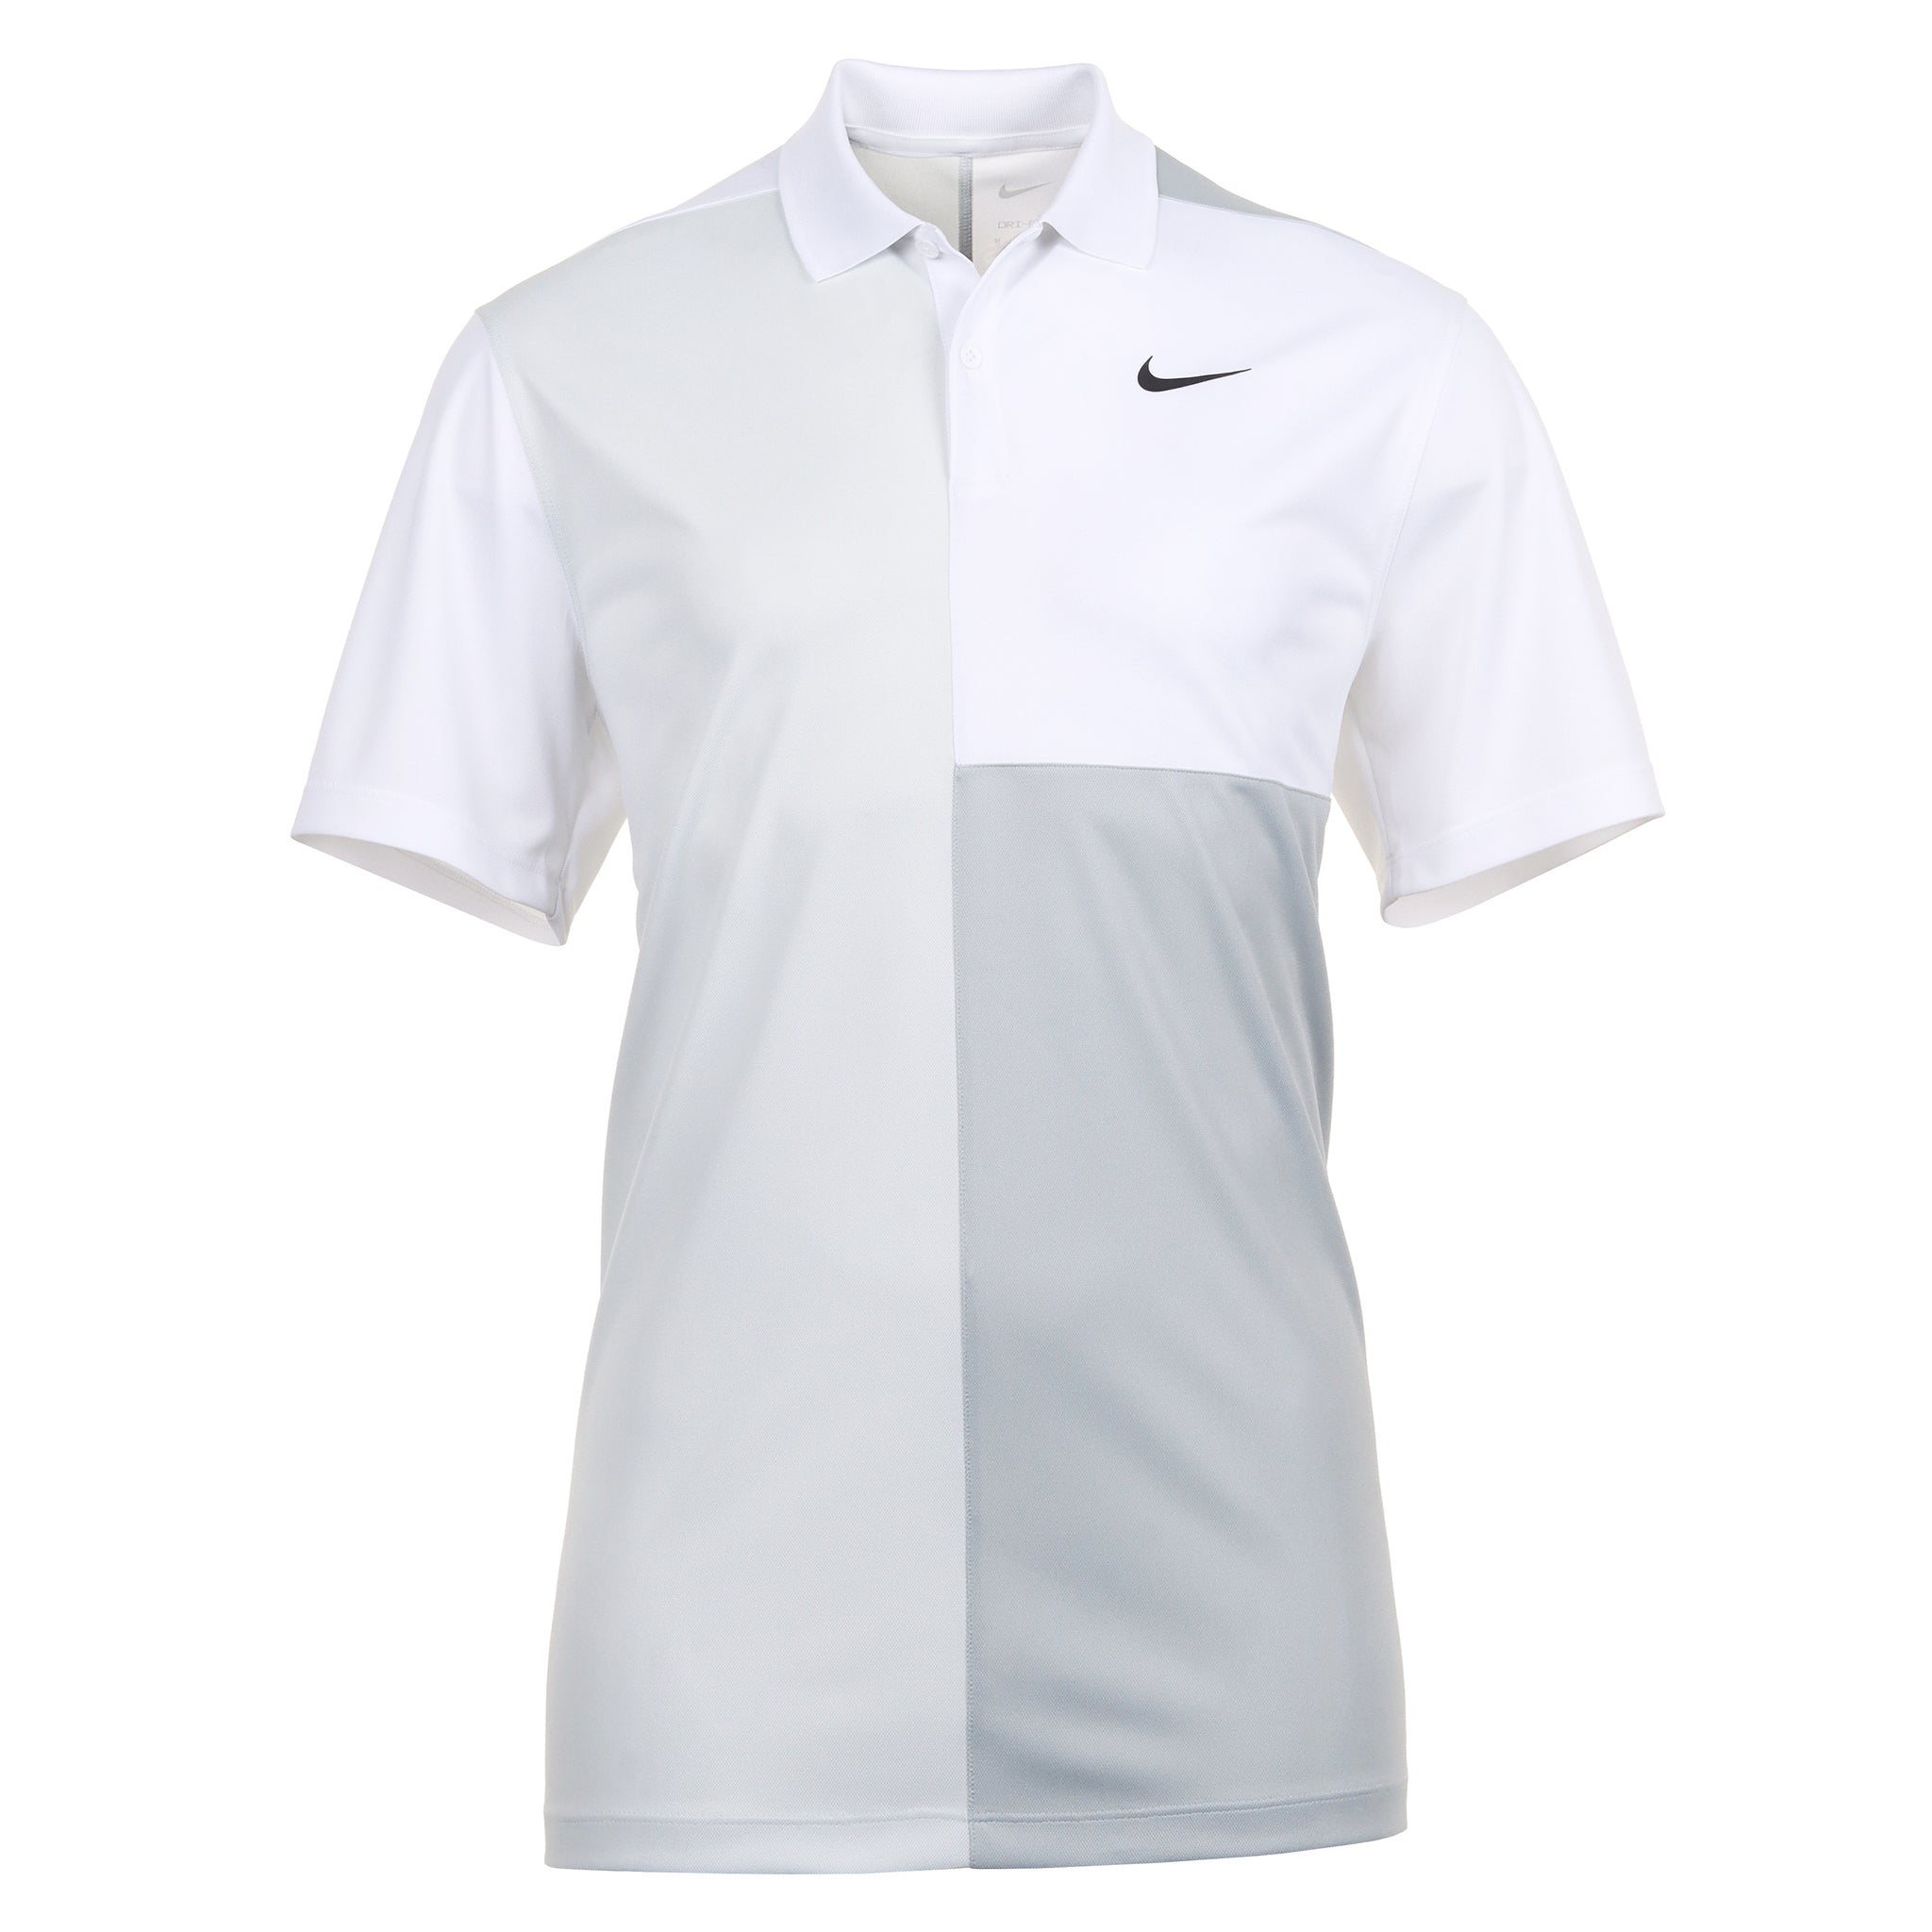 nike-golf-dri-fit-victory-blocked-shirt-fd5827-100-white-light-smoke-grey